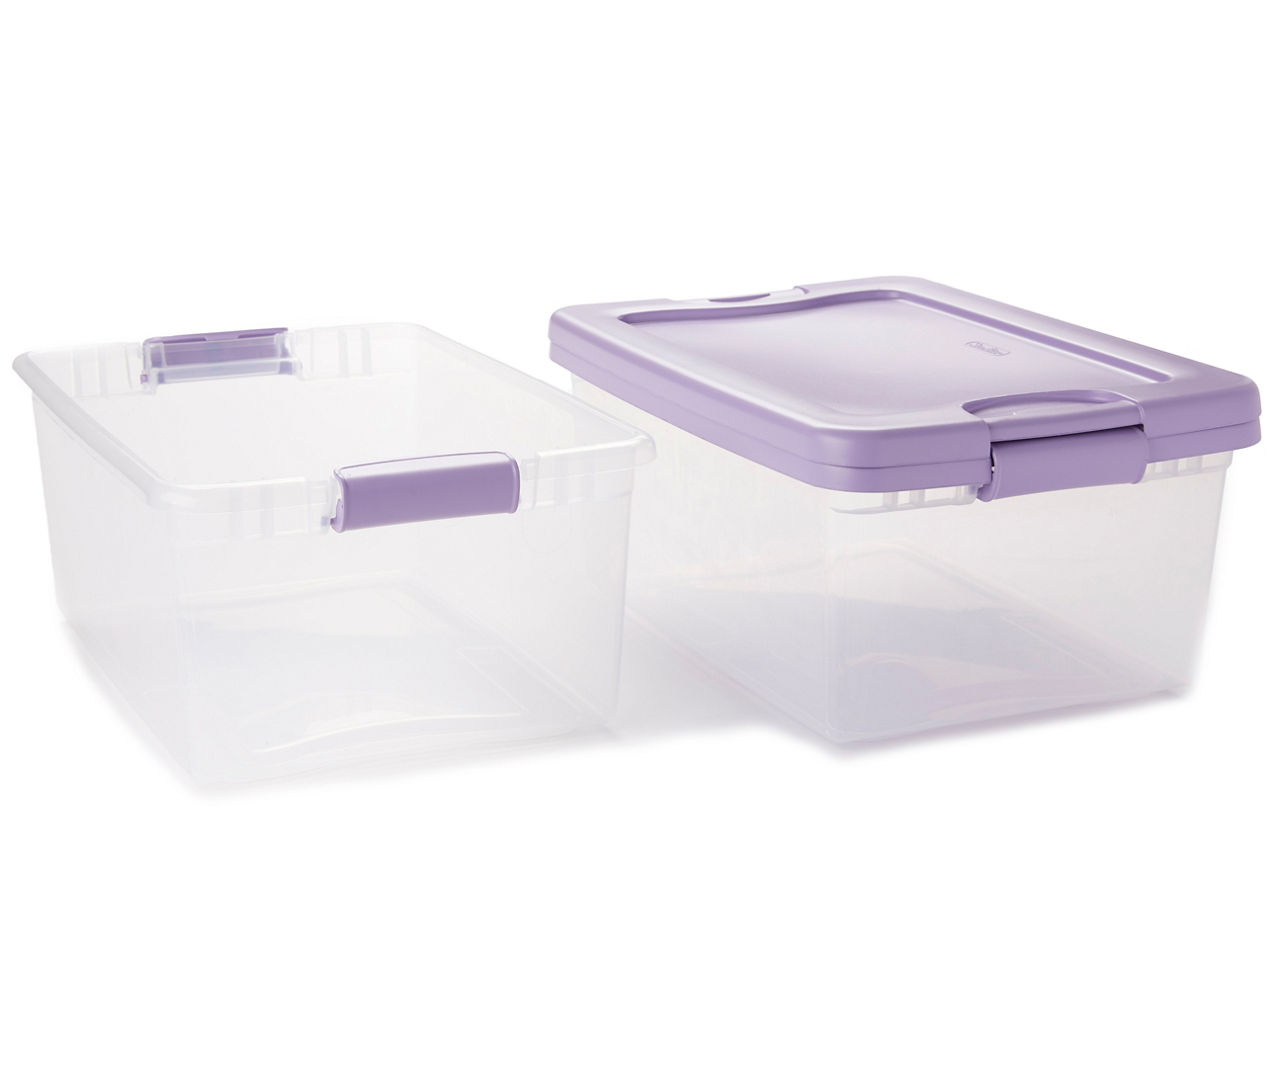 Sterilite Plastic 15 Quart Storage Box Container with Latching Lid